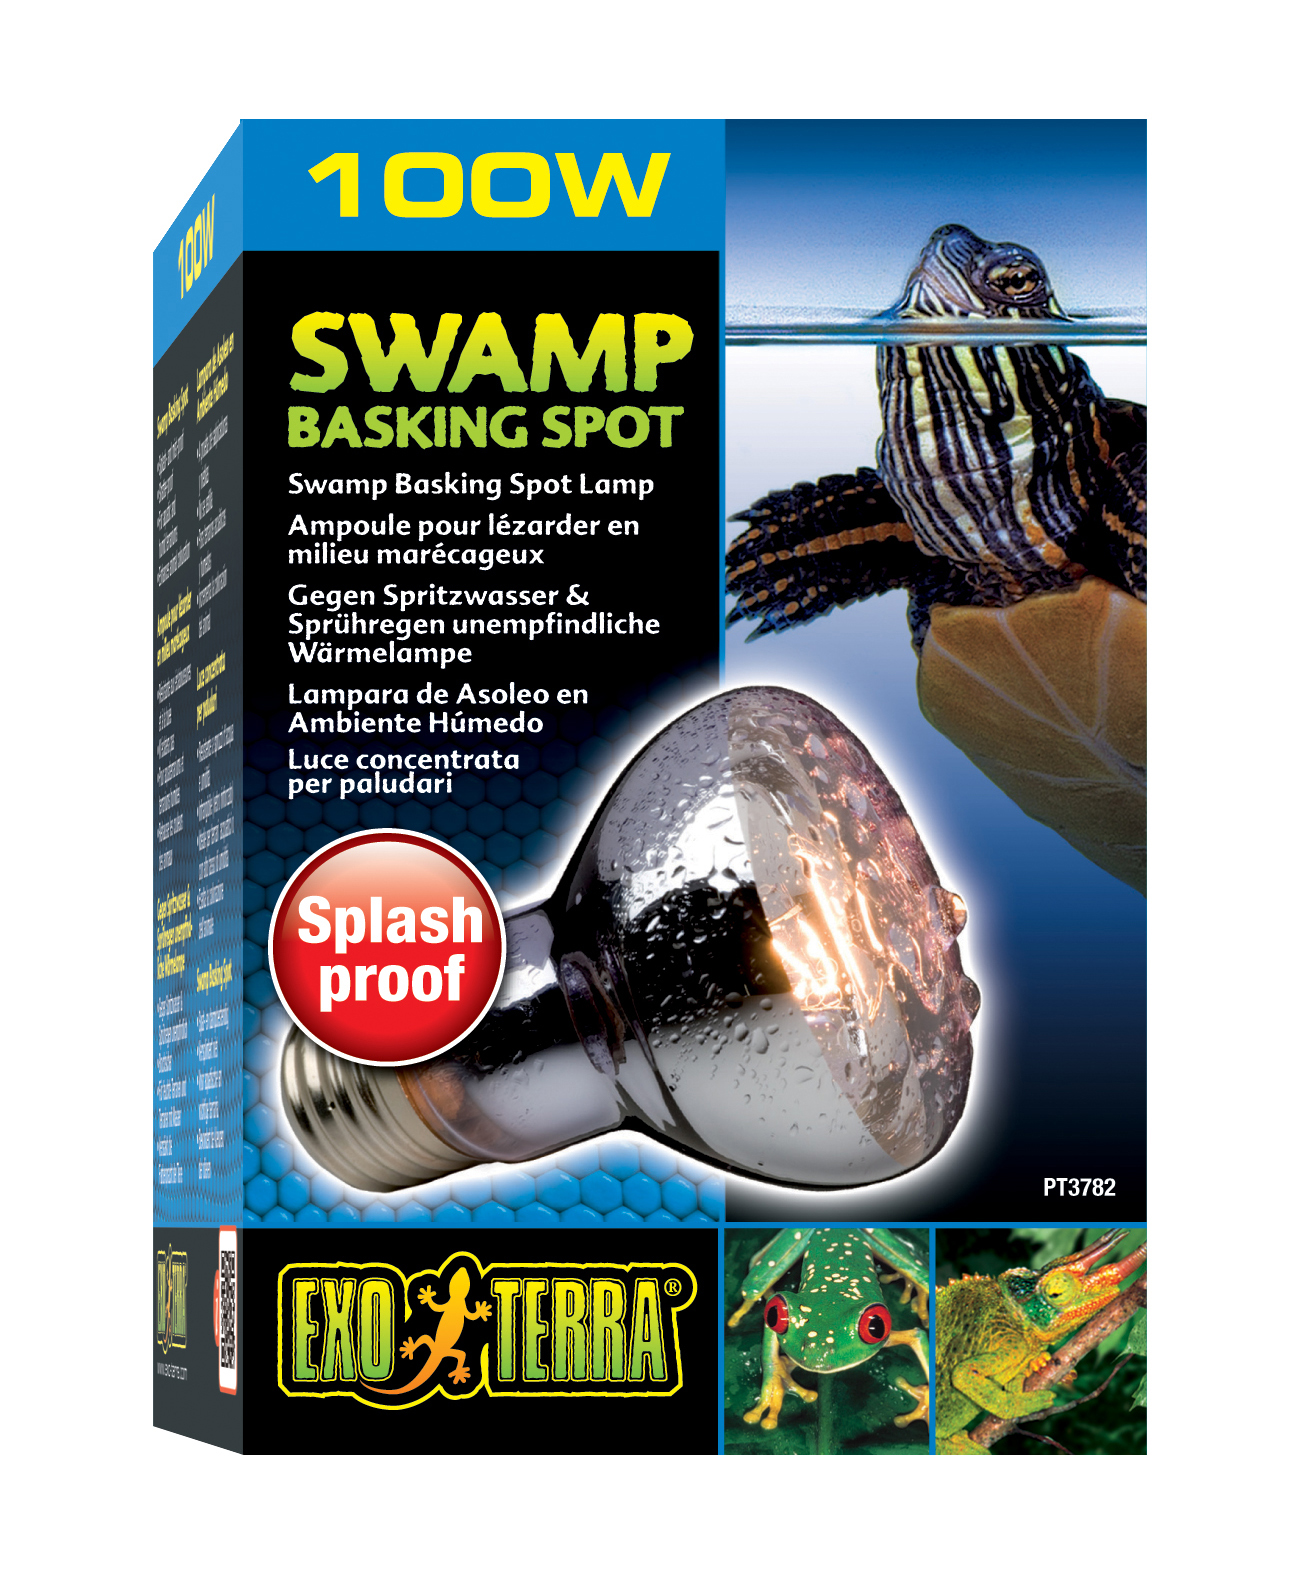 Ex lampe swamp basking spot - <Product shot>